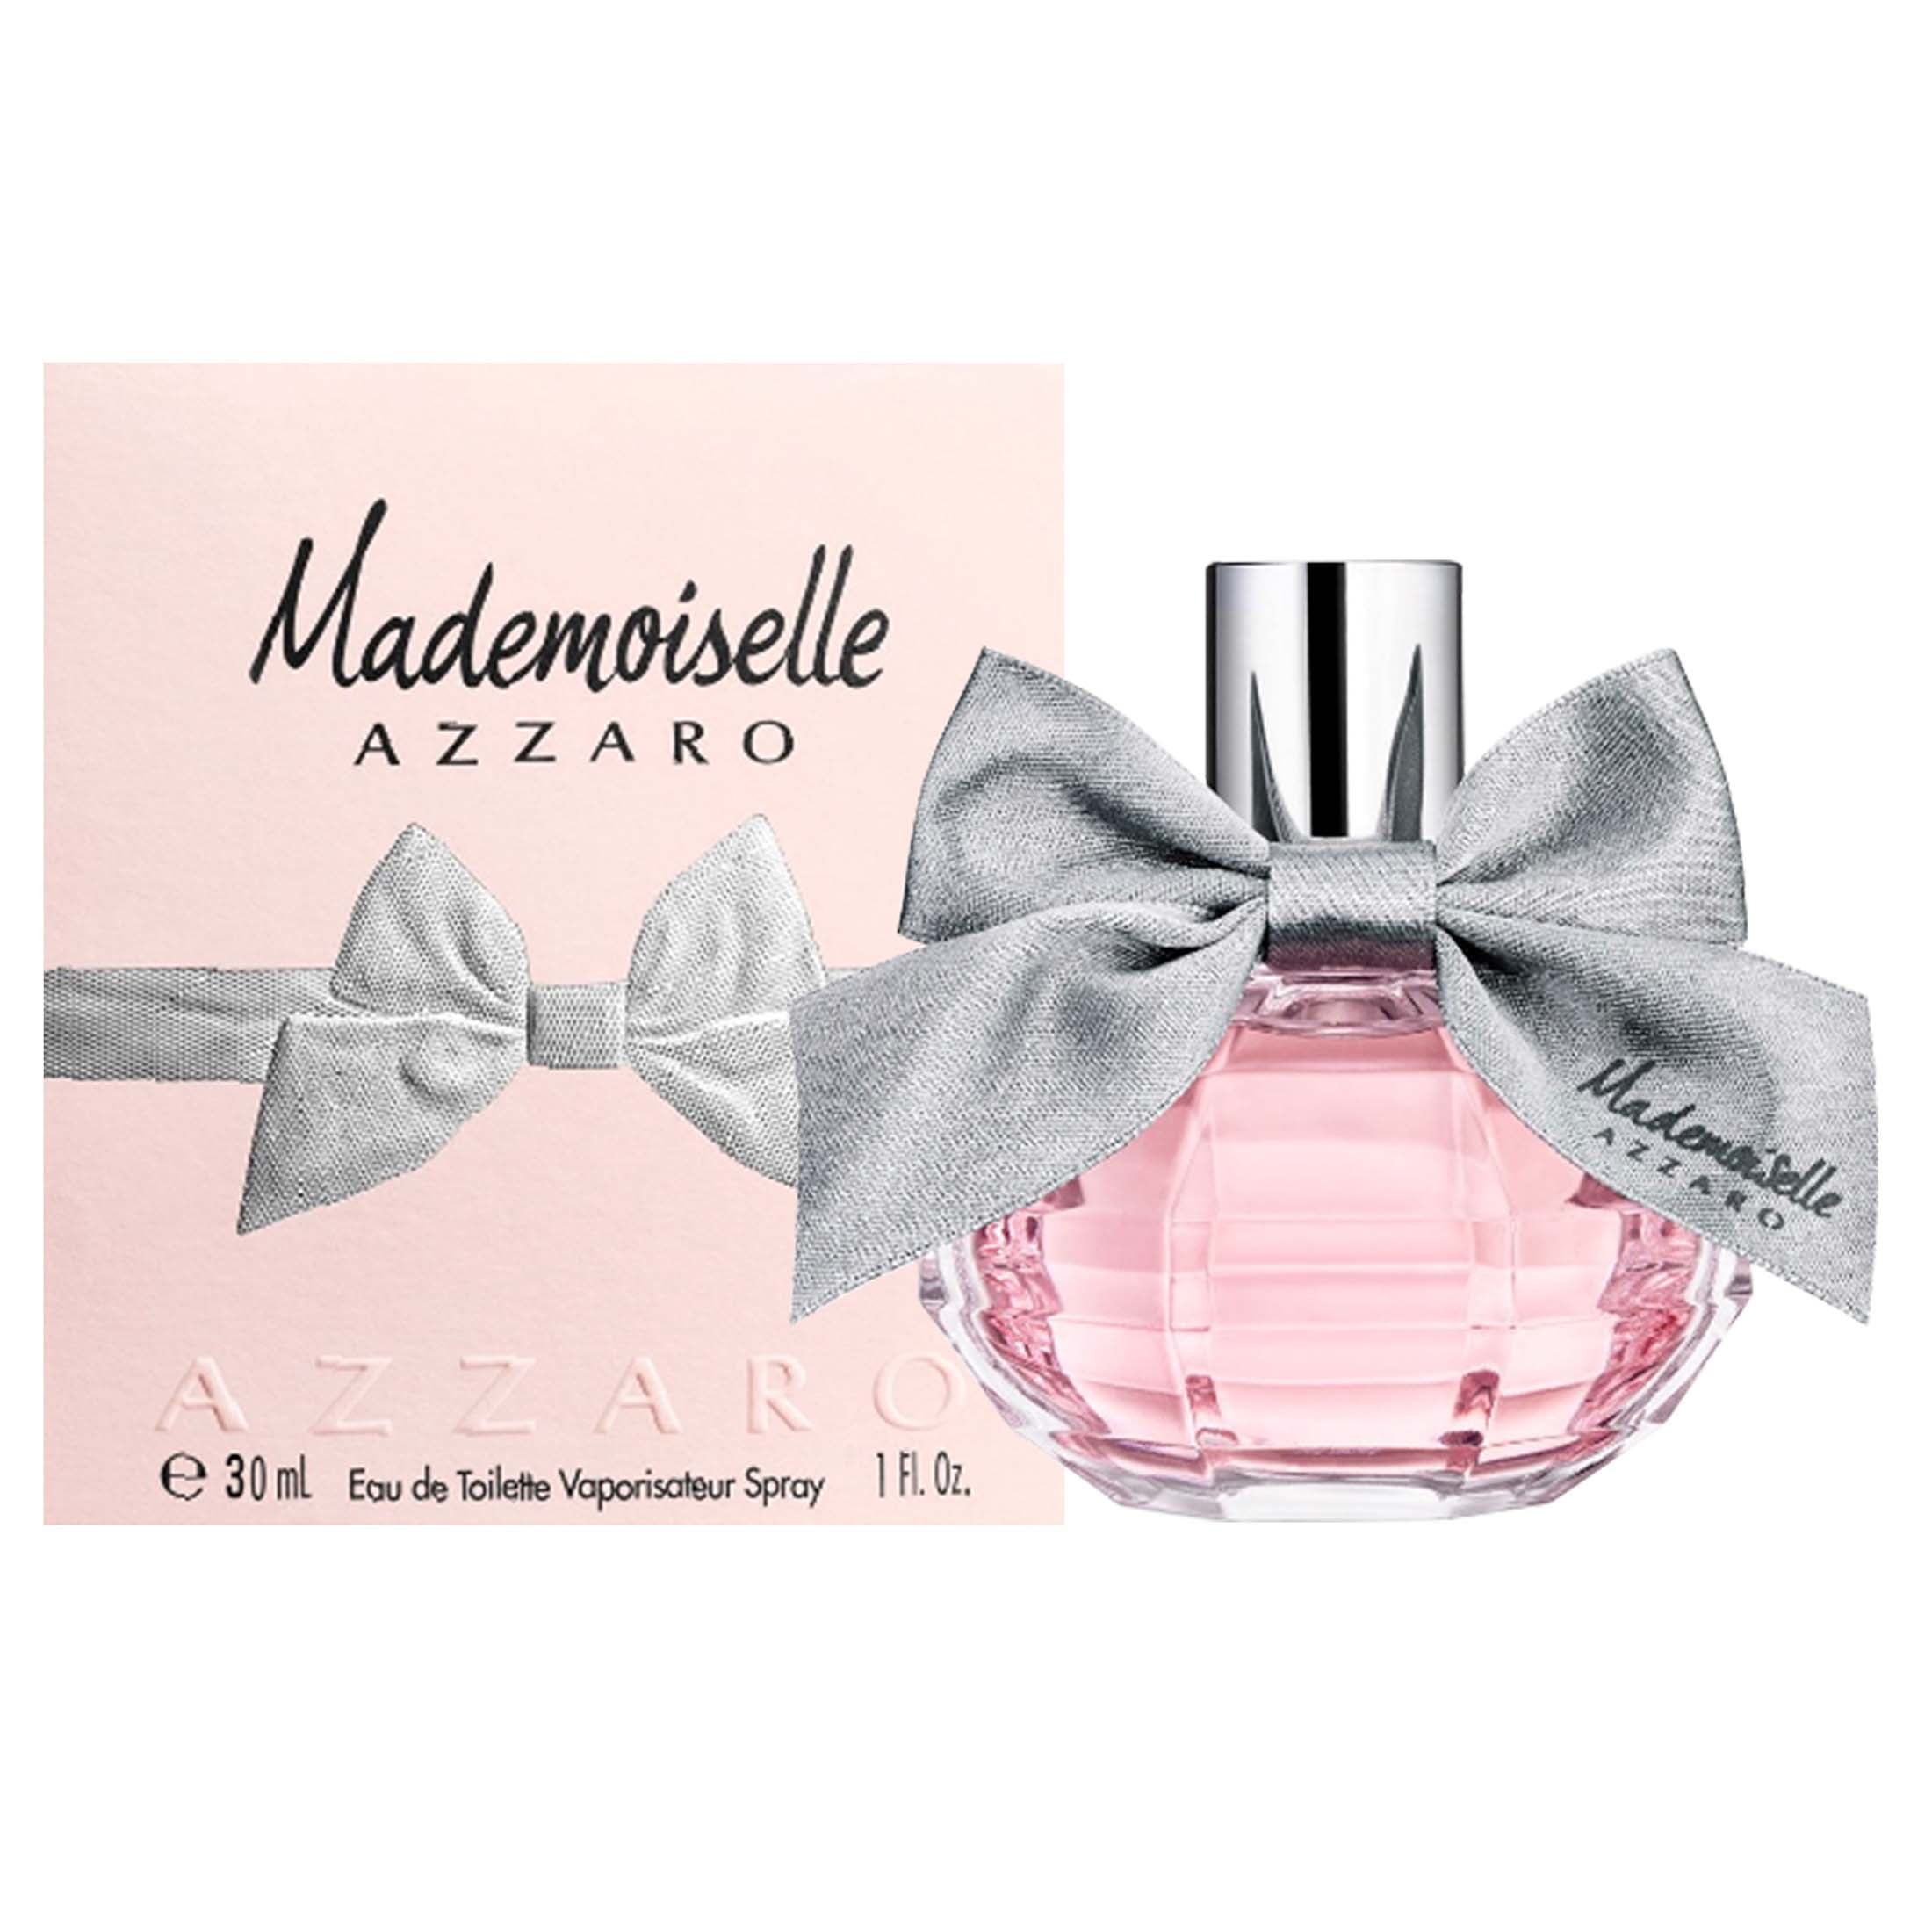 Azzaro Mademoiselle Eau de Toilette, Perfume for Women, 1.0 oz